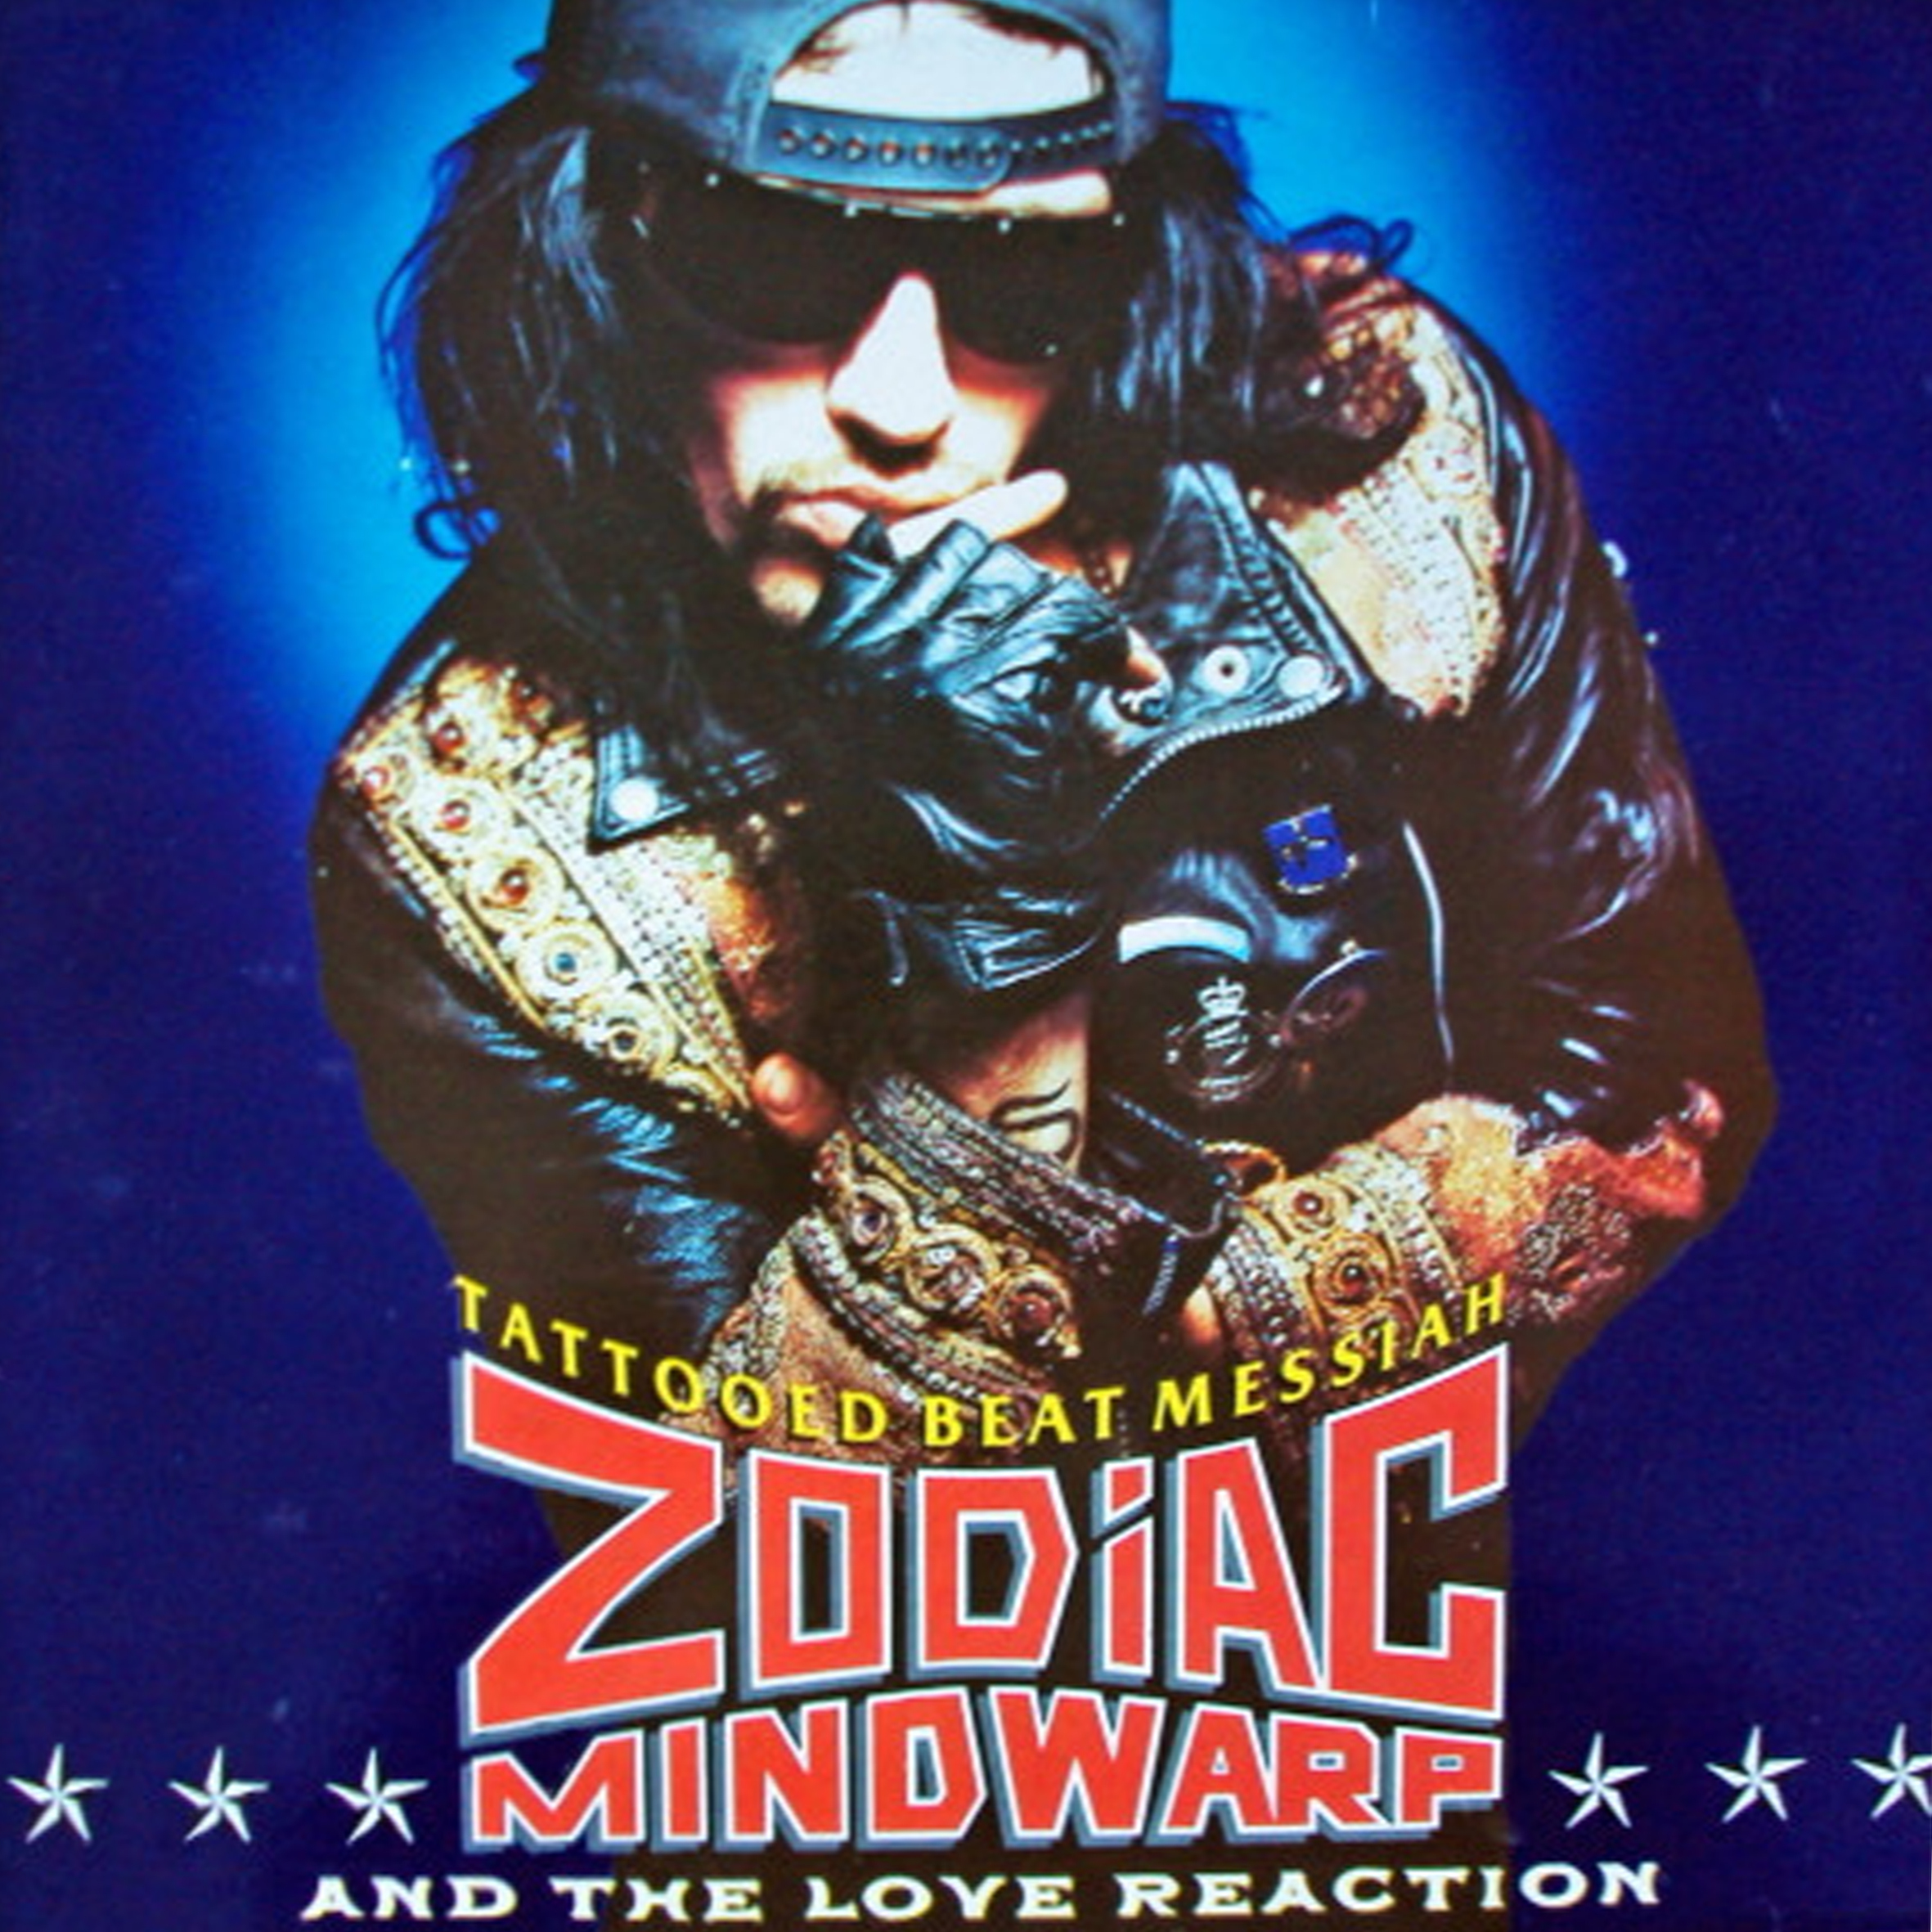 Vinil - Zodiac Mindwarp And The Love Reaction - Tattooed Beat Messiah